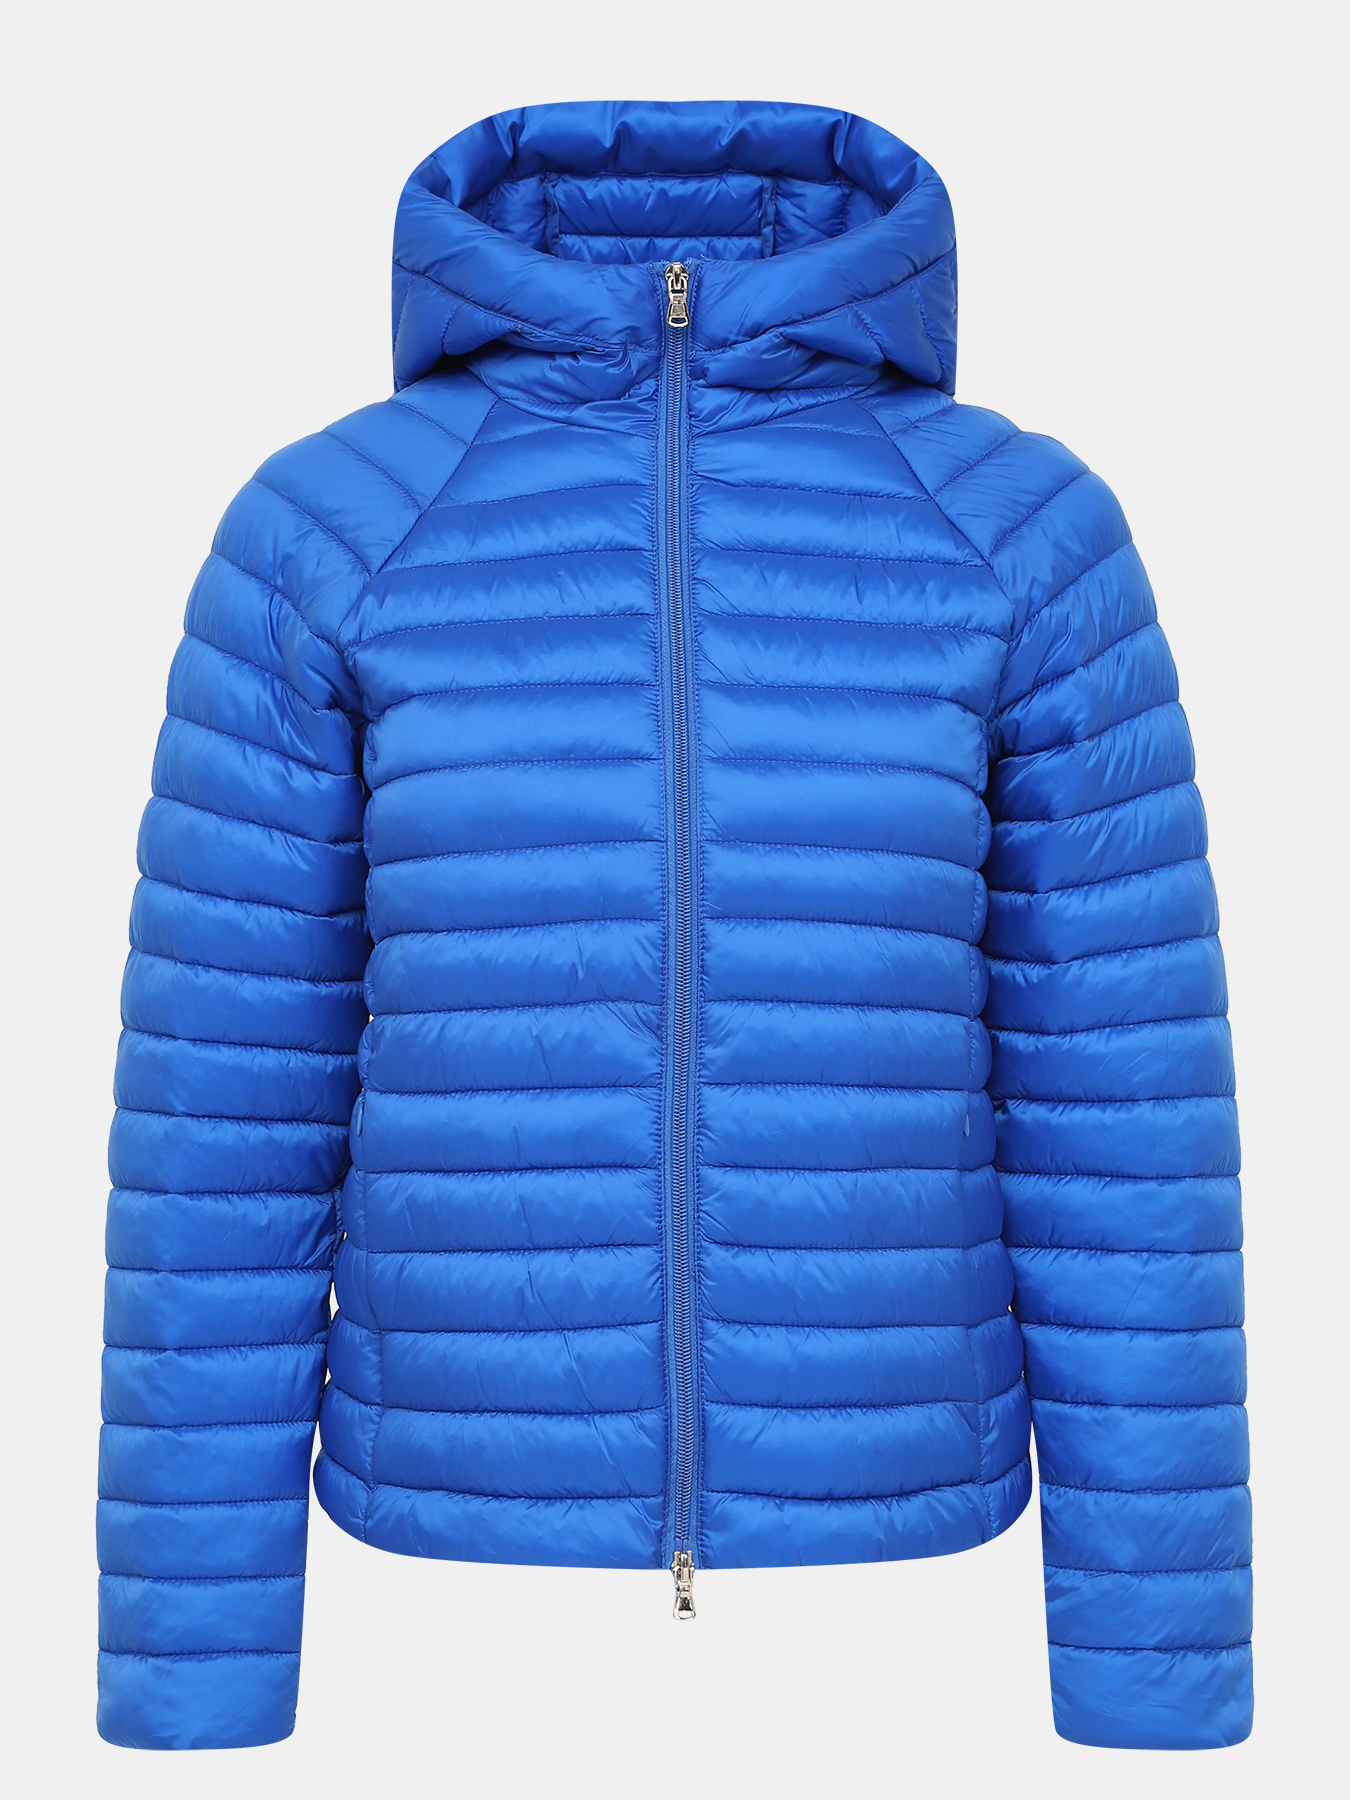 Куртка Incerta Emme Marella 419367-023, цвет синий, размер 46 - фото 1